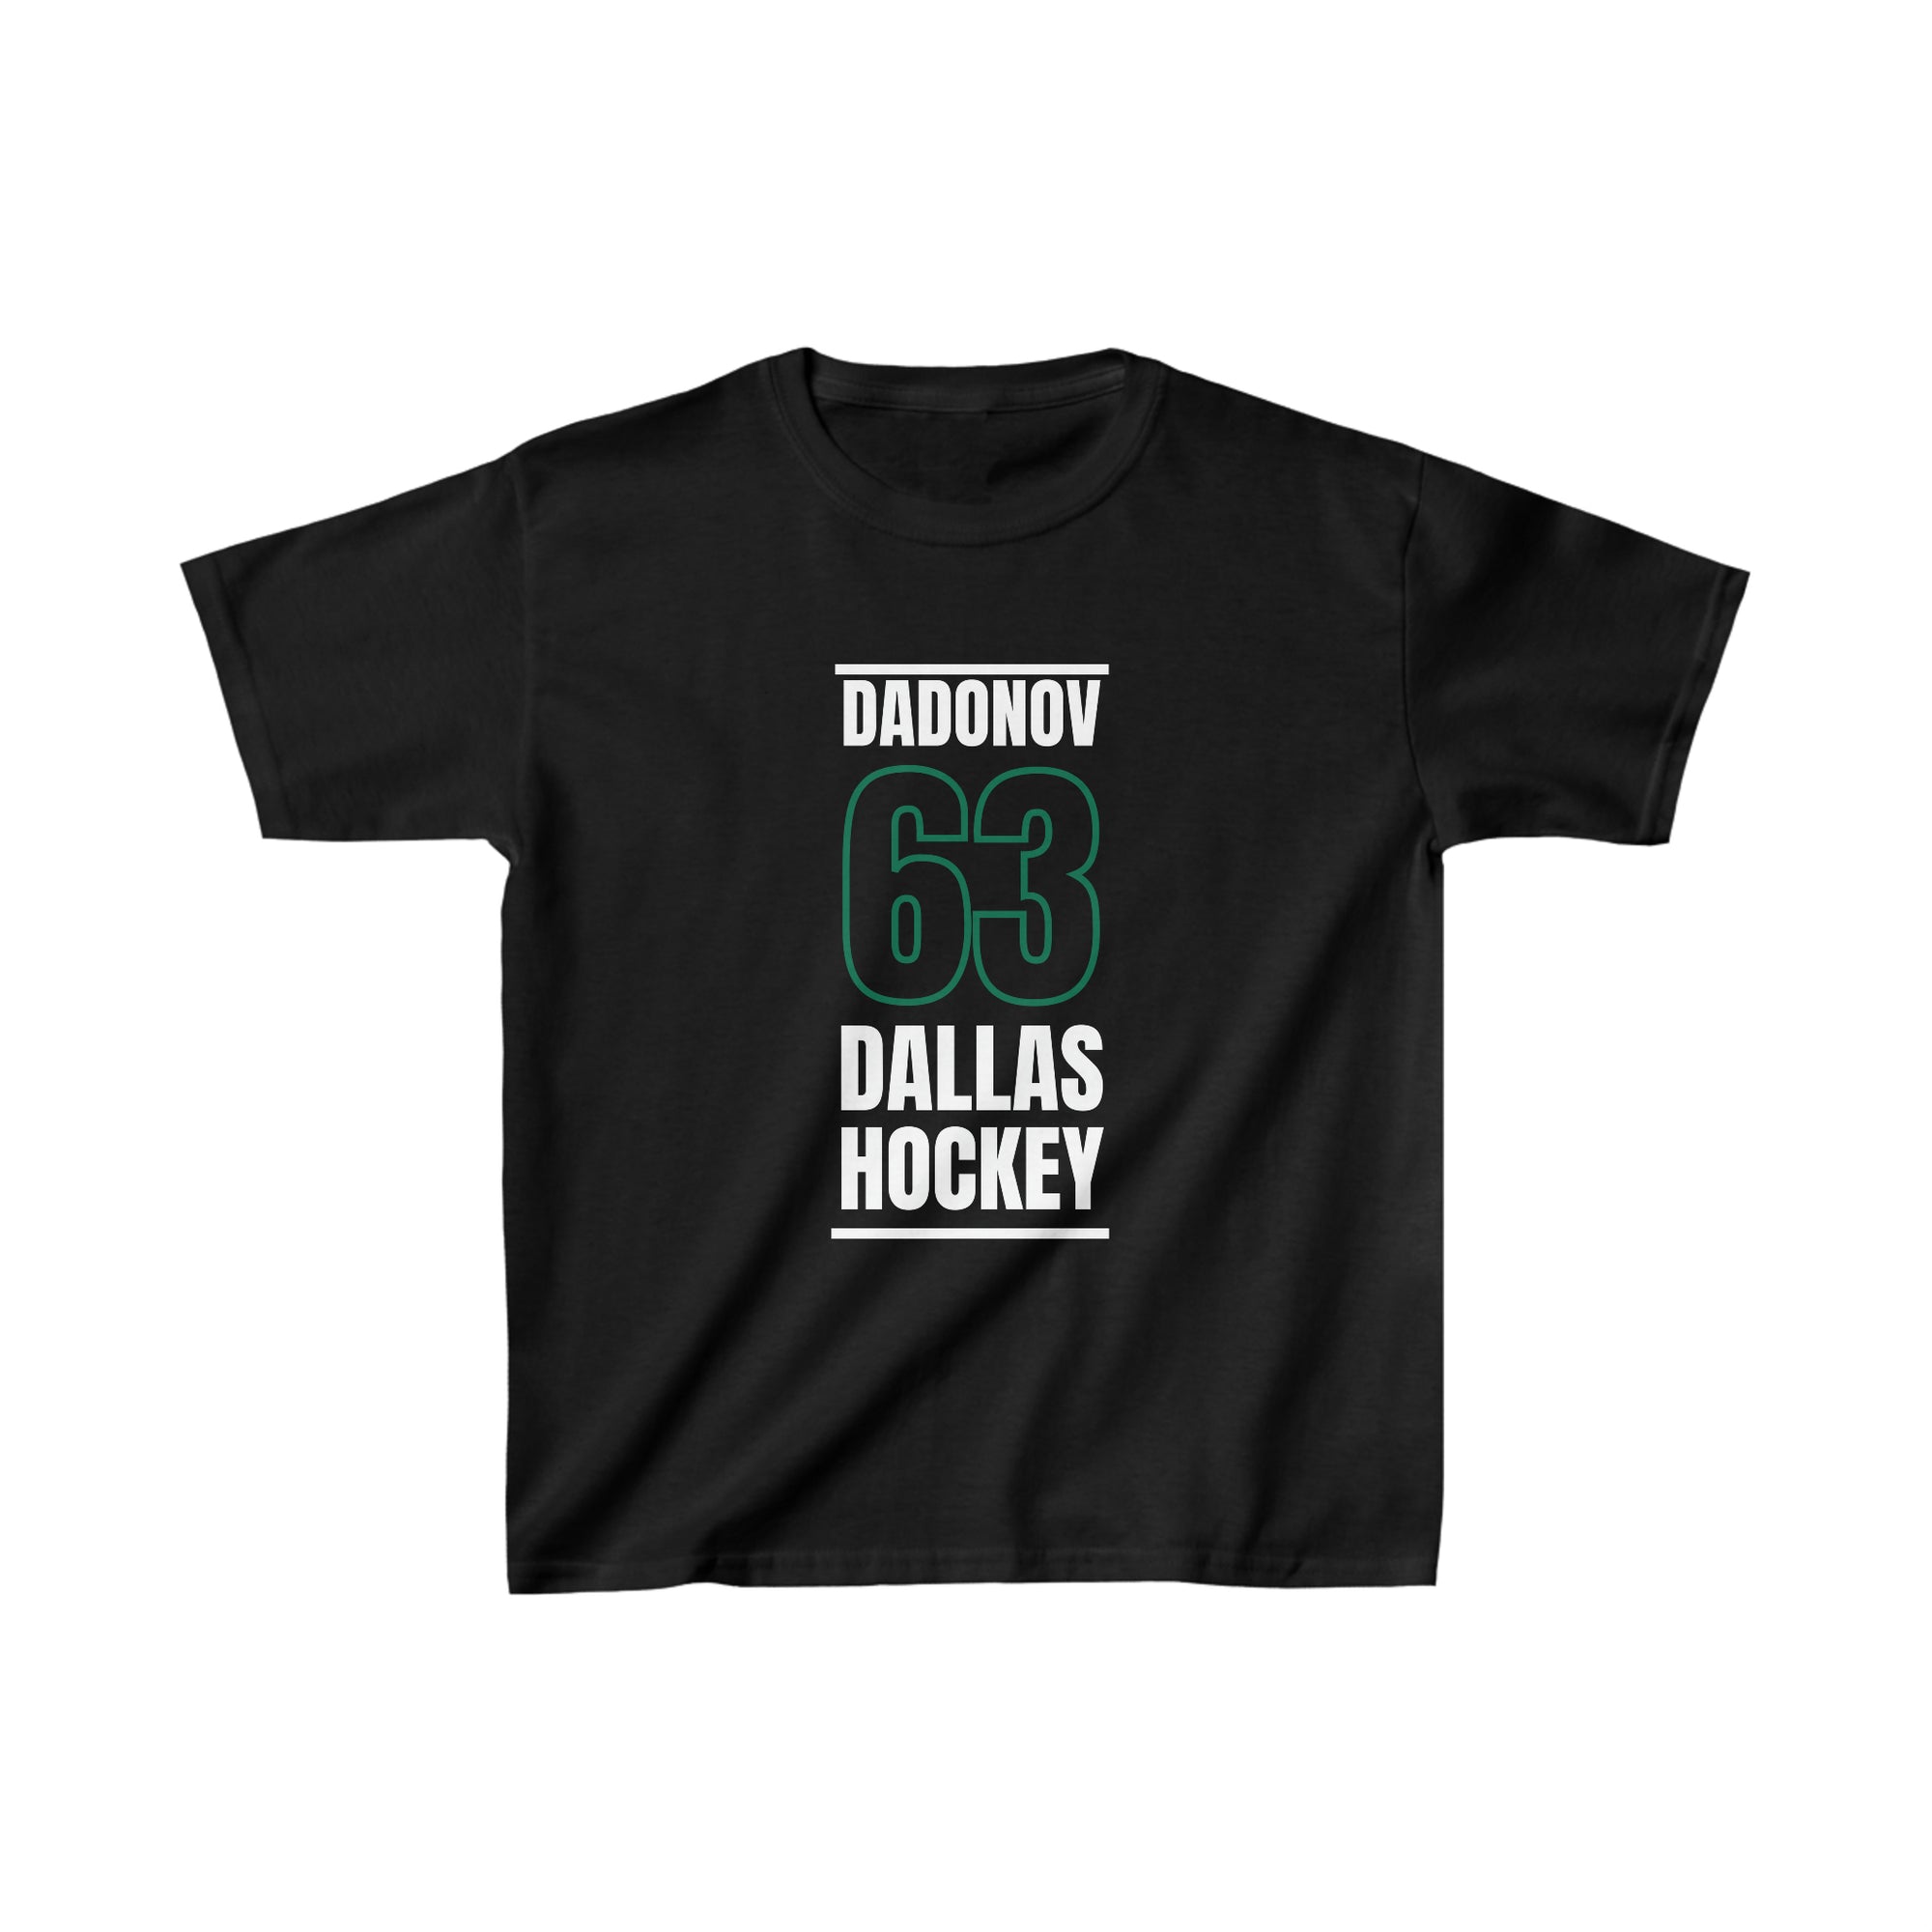 Dadonov 63 Dallas Hockey Black Vertical Design Kids Tee